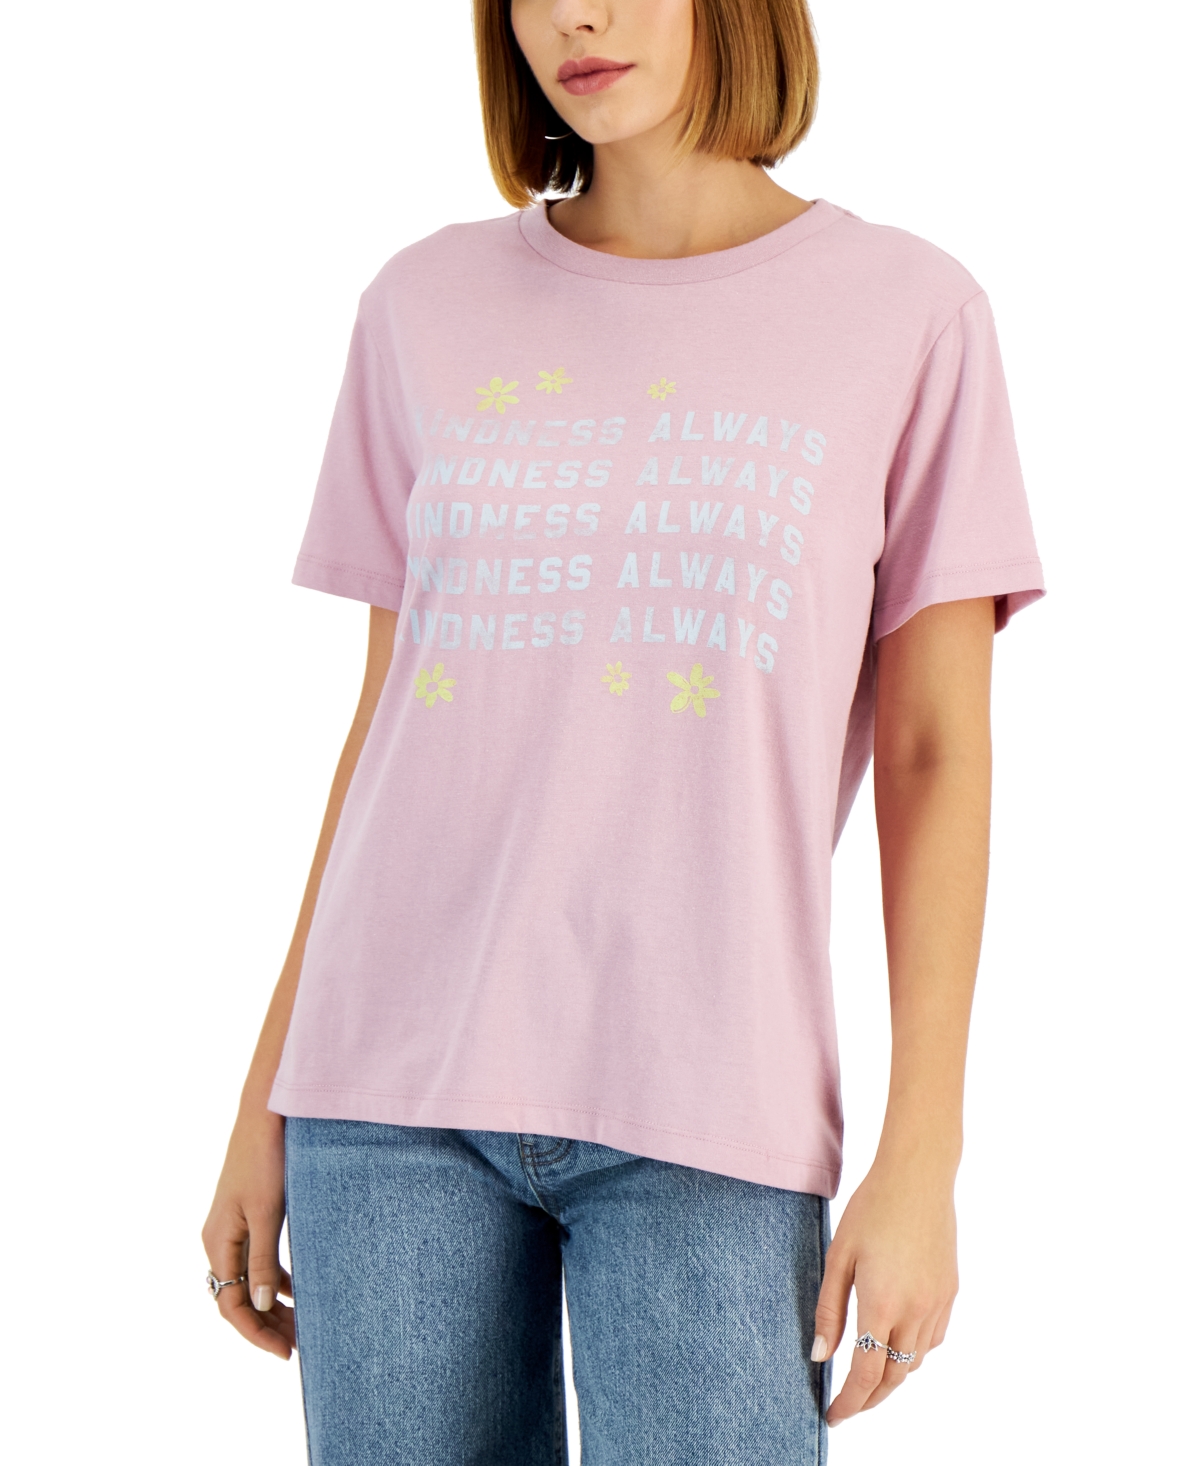 Grayson Threads Black Juniors' Kindness Always Graphic T-Shirt